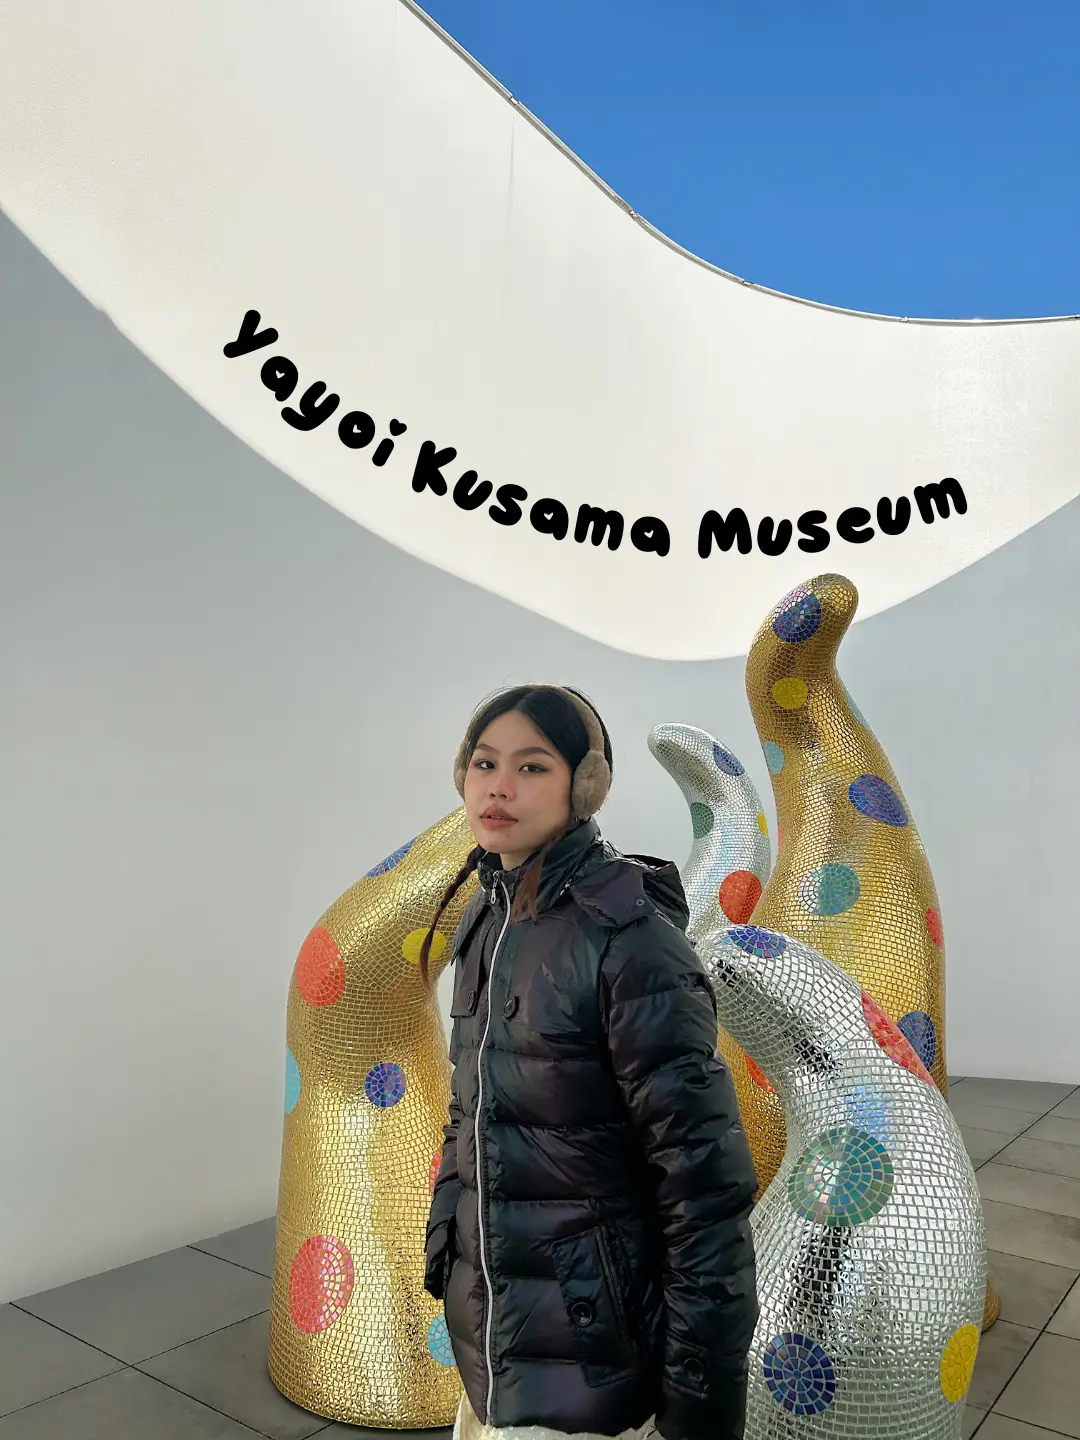 Yayoi Kusama Museum - Tokyo Attractions - Japan Travel